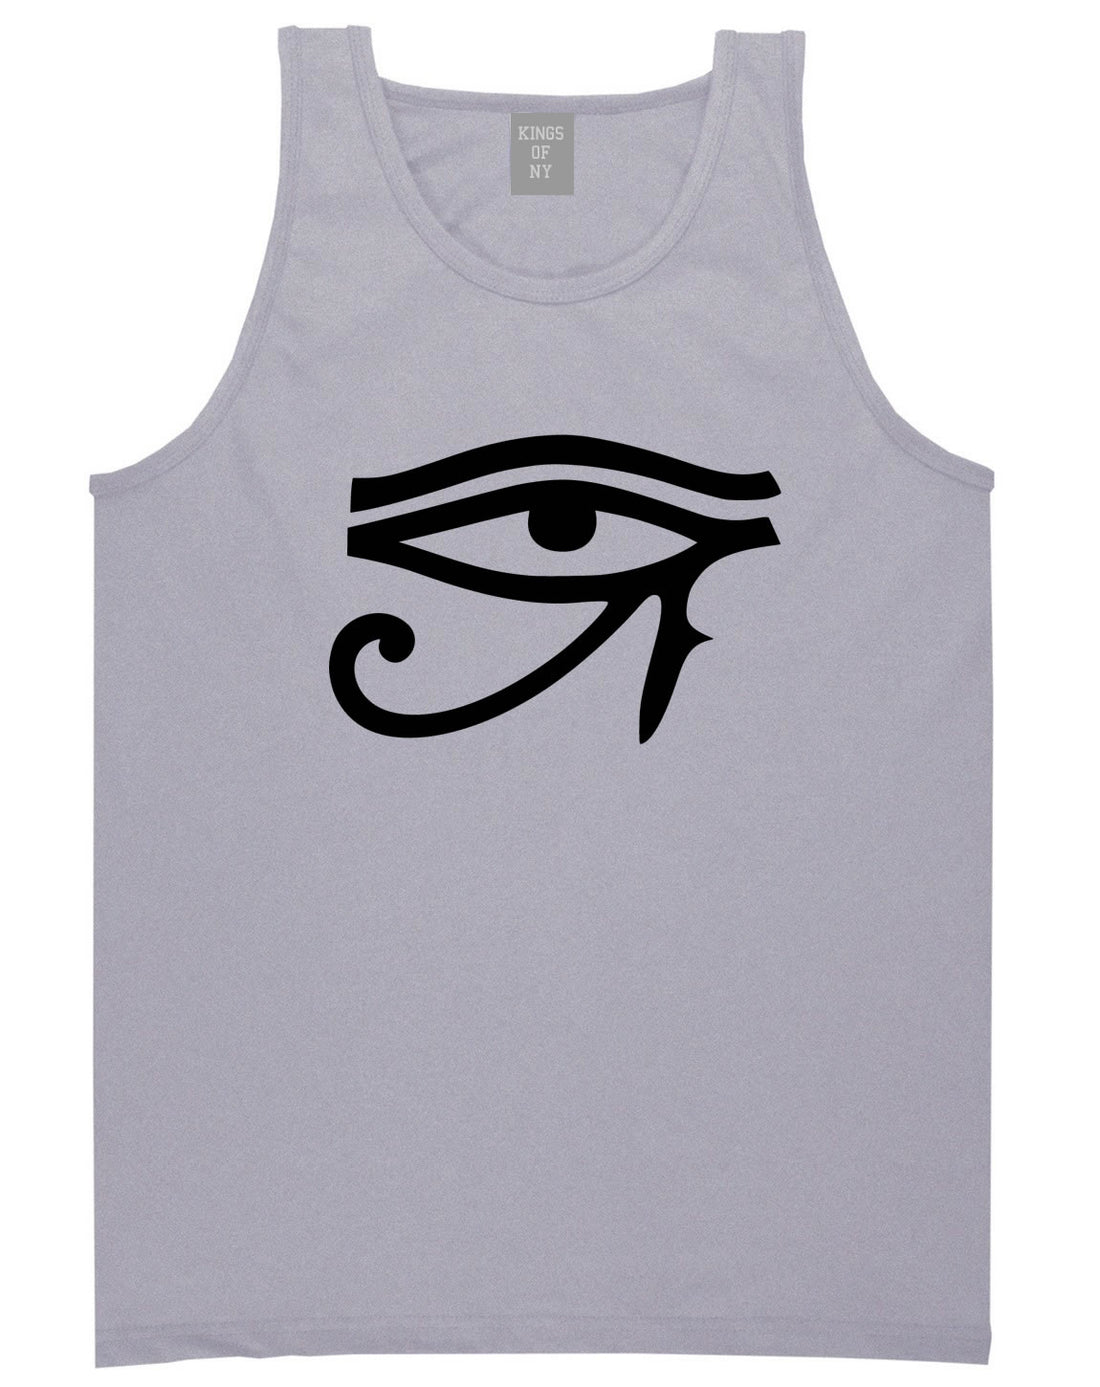 Eye of Horus Egyptian Tank Top by Kings Of NY